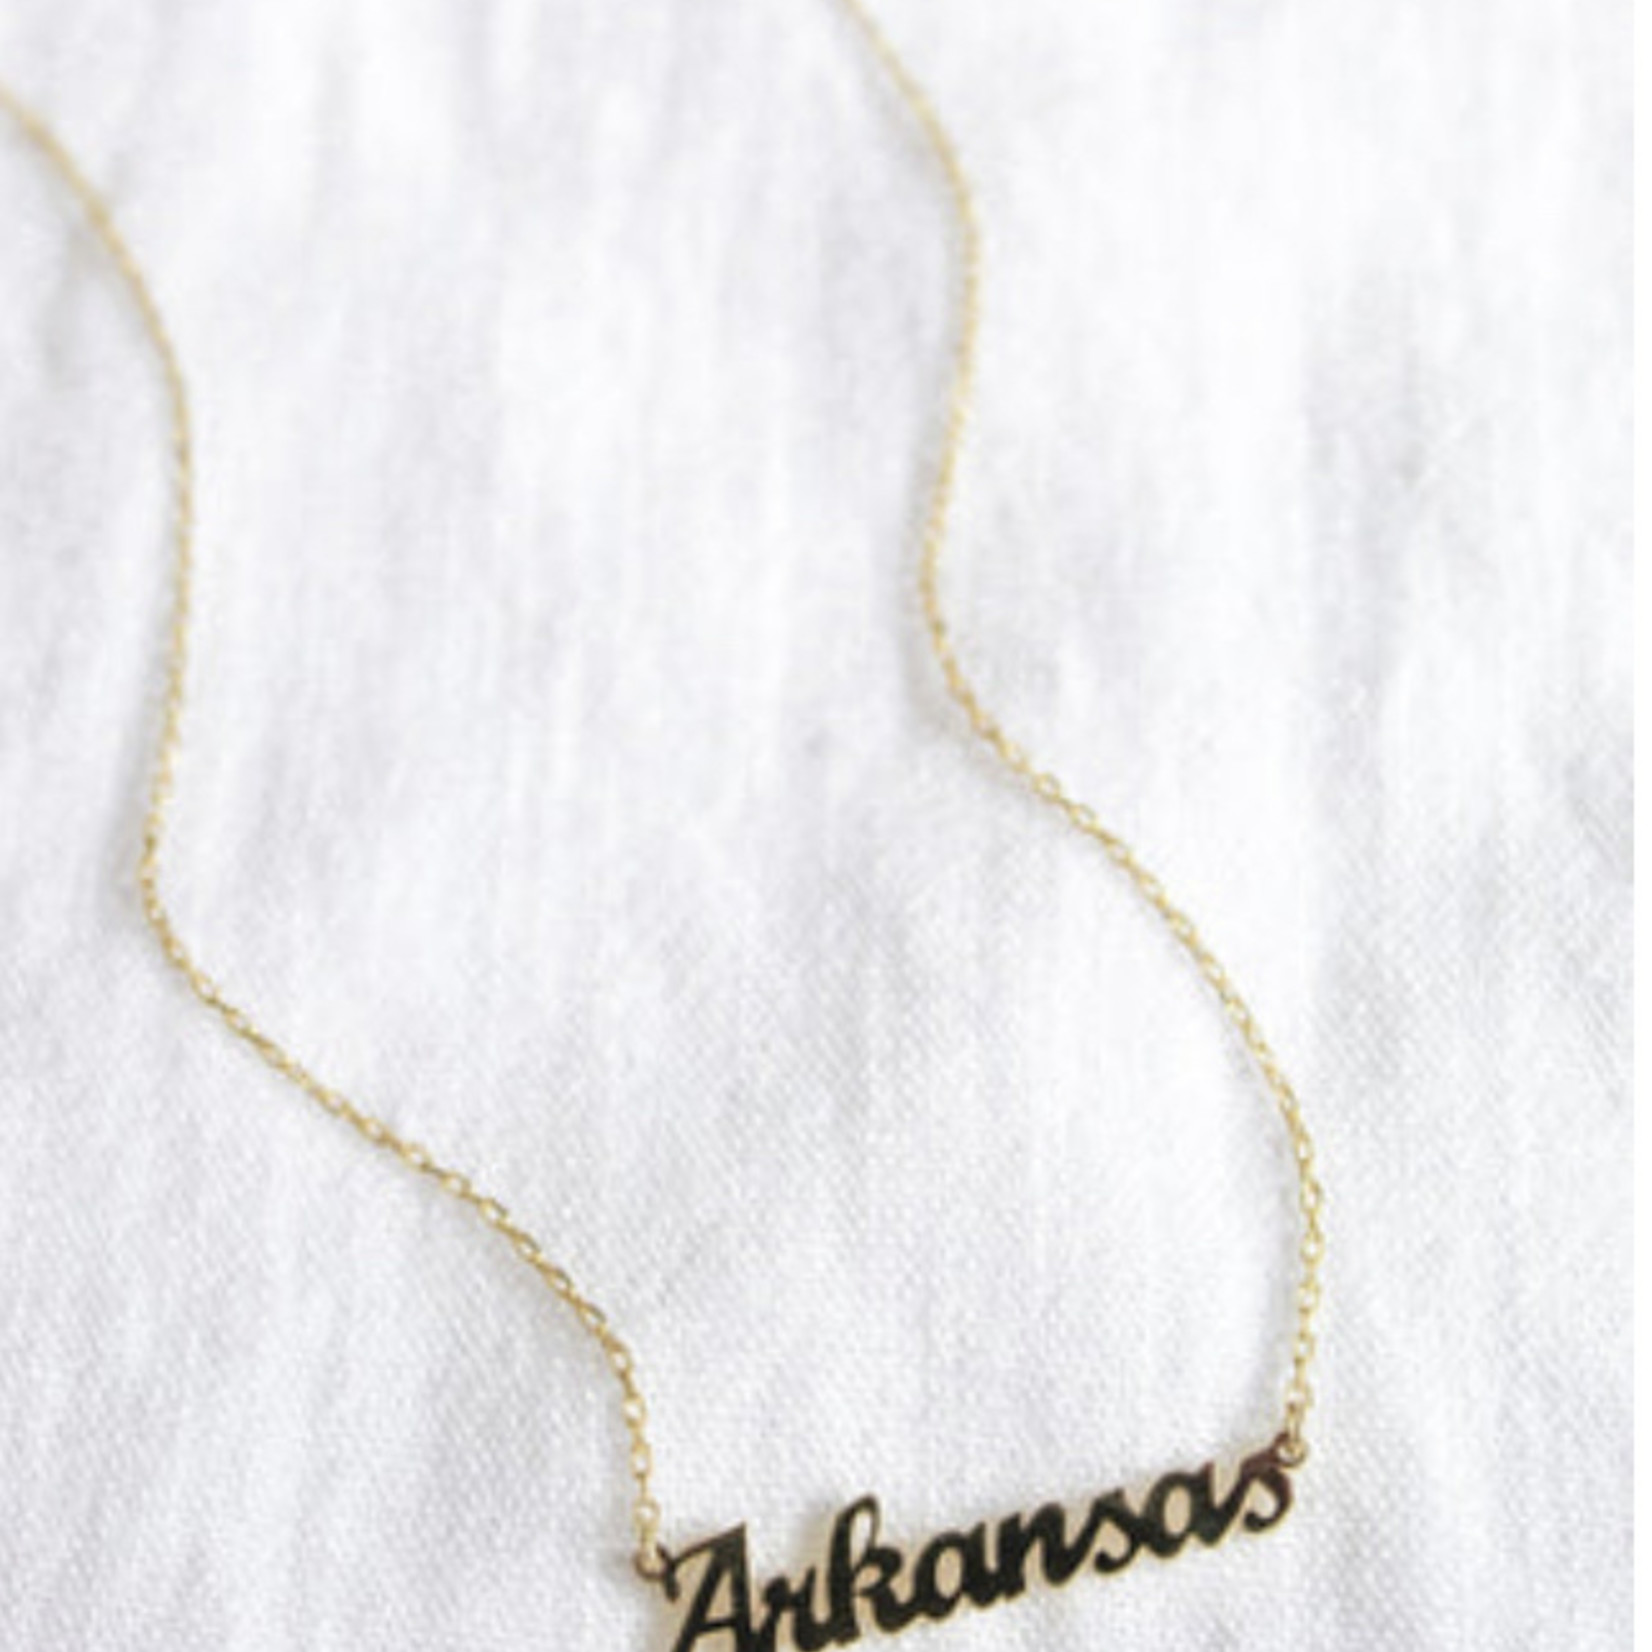 Kinsey Designs Arkansas Necklace